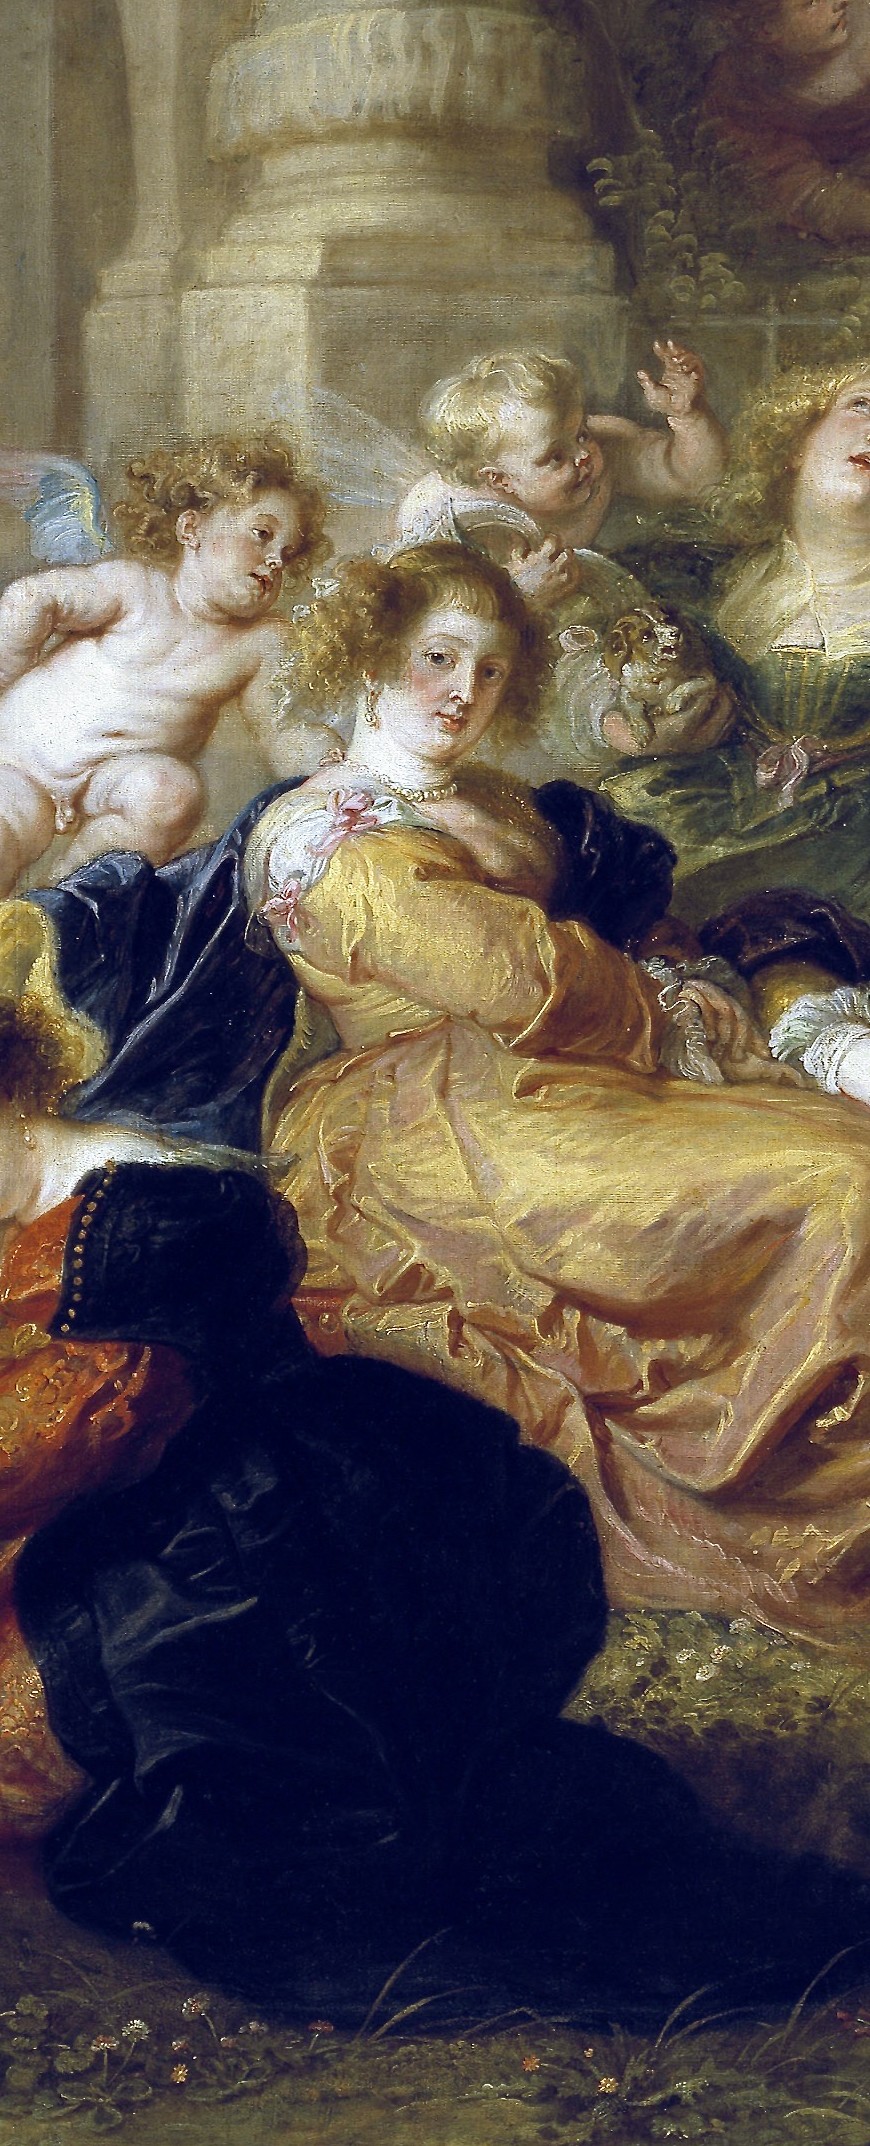 The Garden of Love, by Peter Paul Rubens